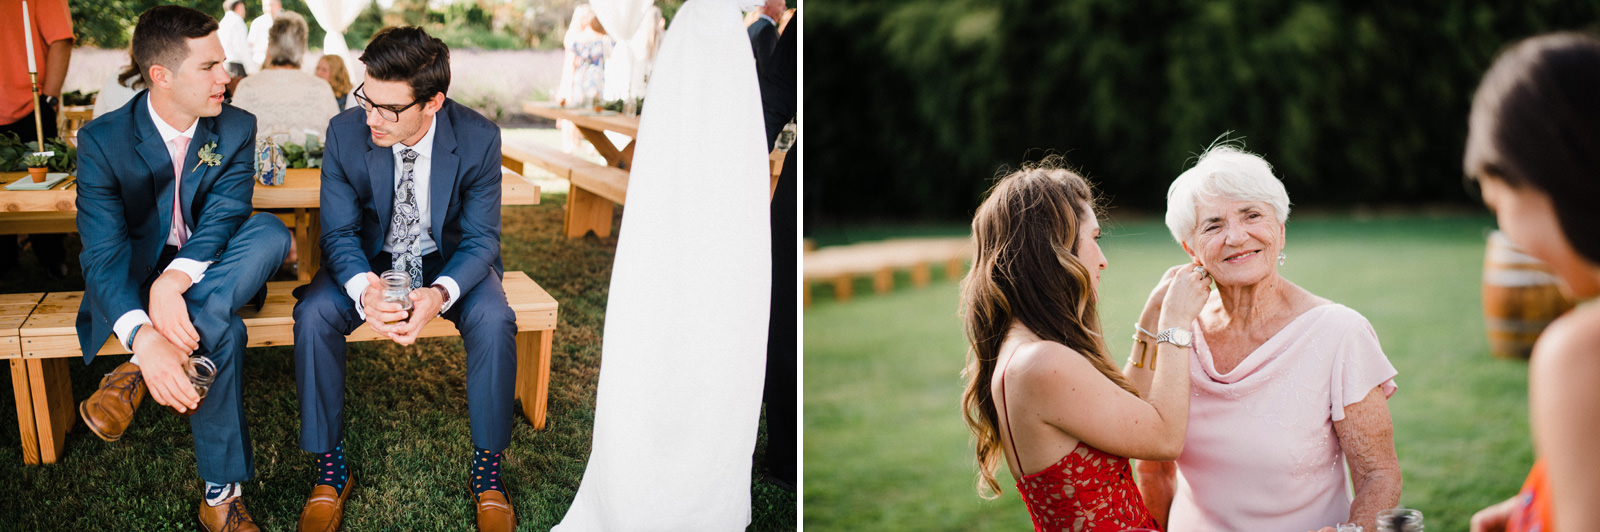 052-woodinville-lavendar-farm-wedding-with-golden-glowy-photos.jpg